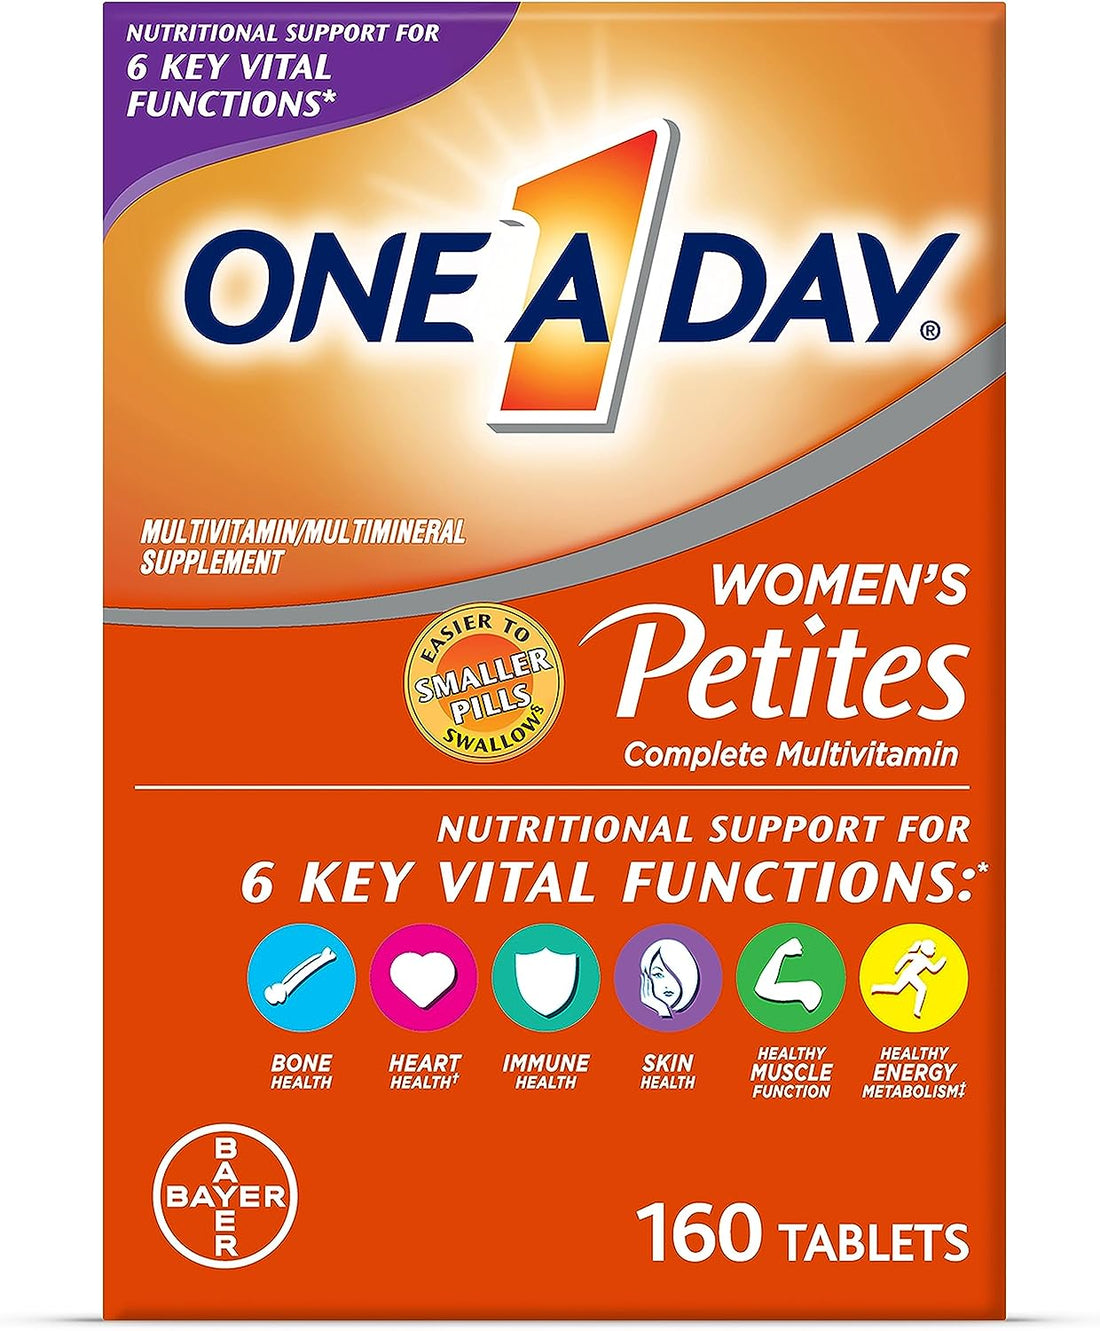 One a Day Multivitaminico Premium 160 Tabletas Para Mujeres Petite